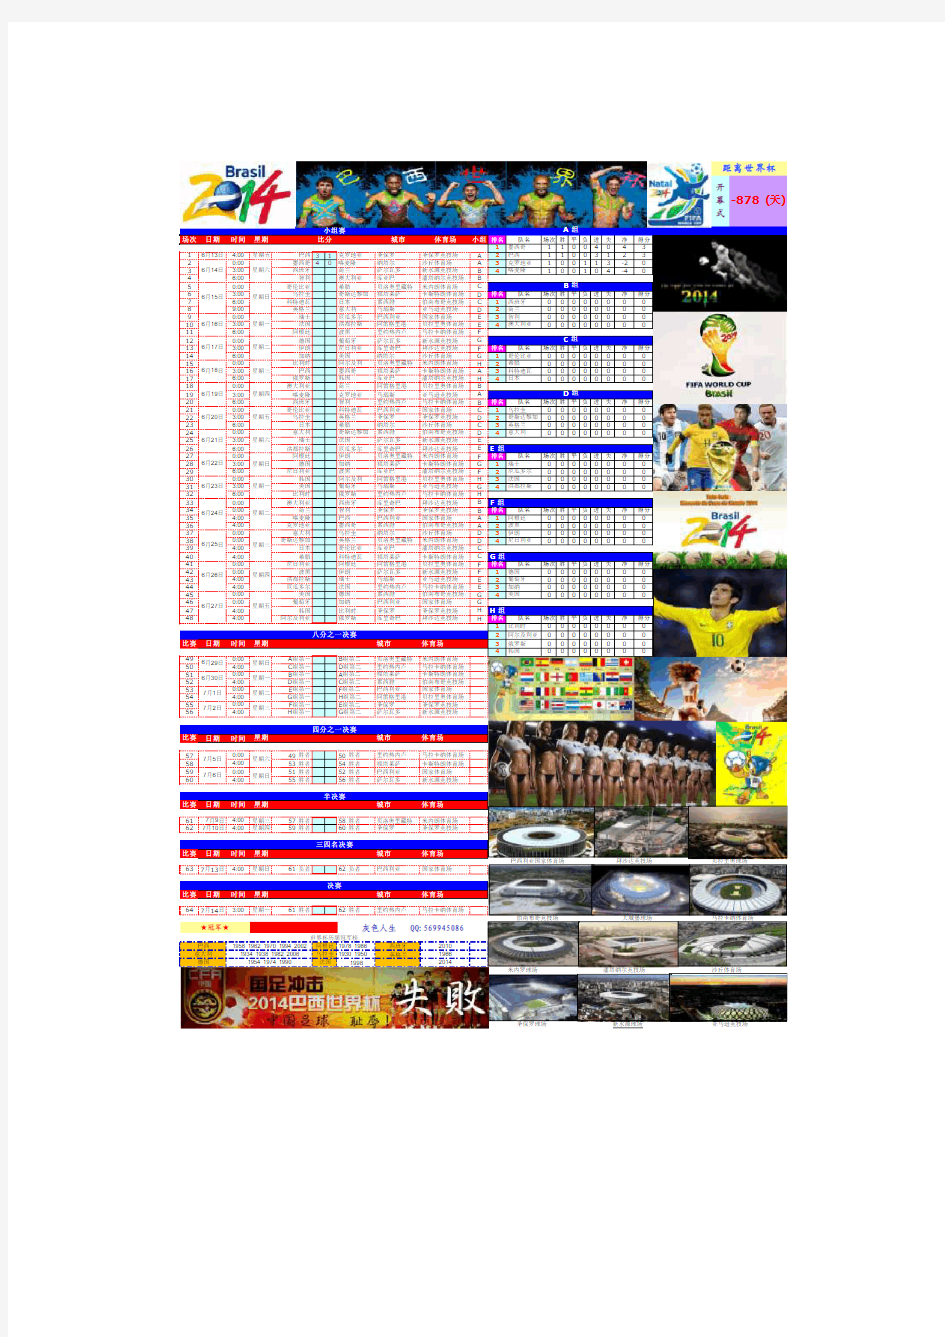 2014世界杯赛程表(Excel 2003版)